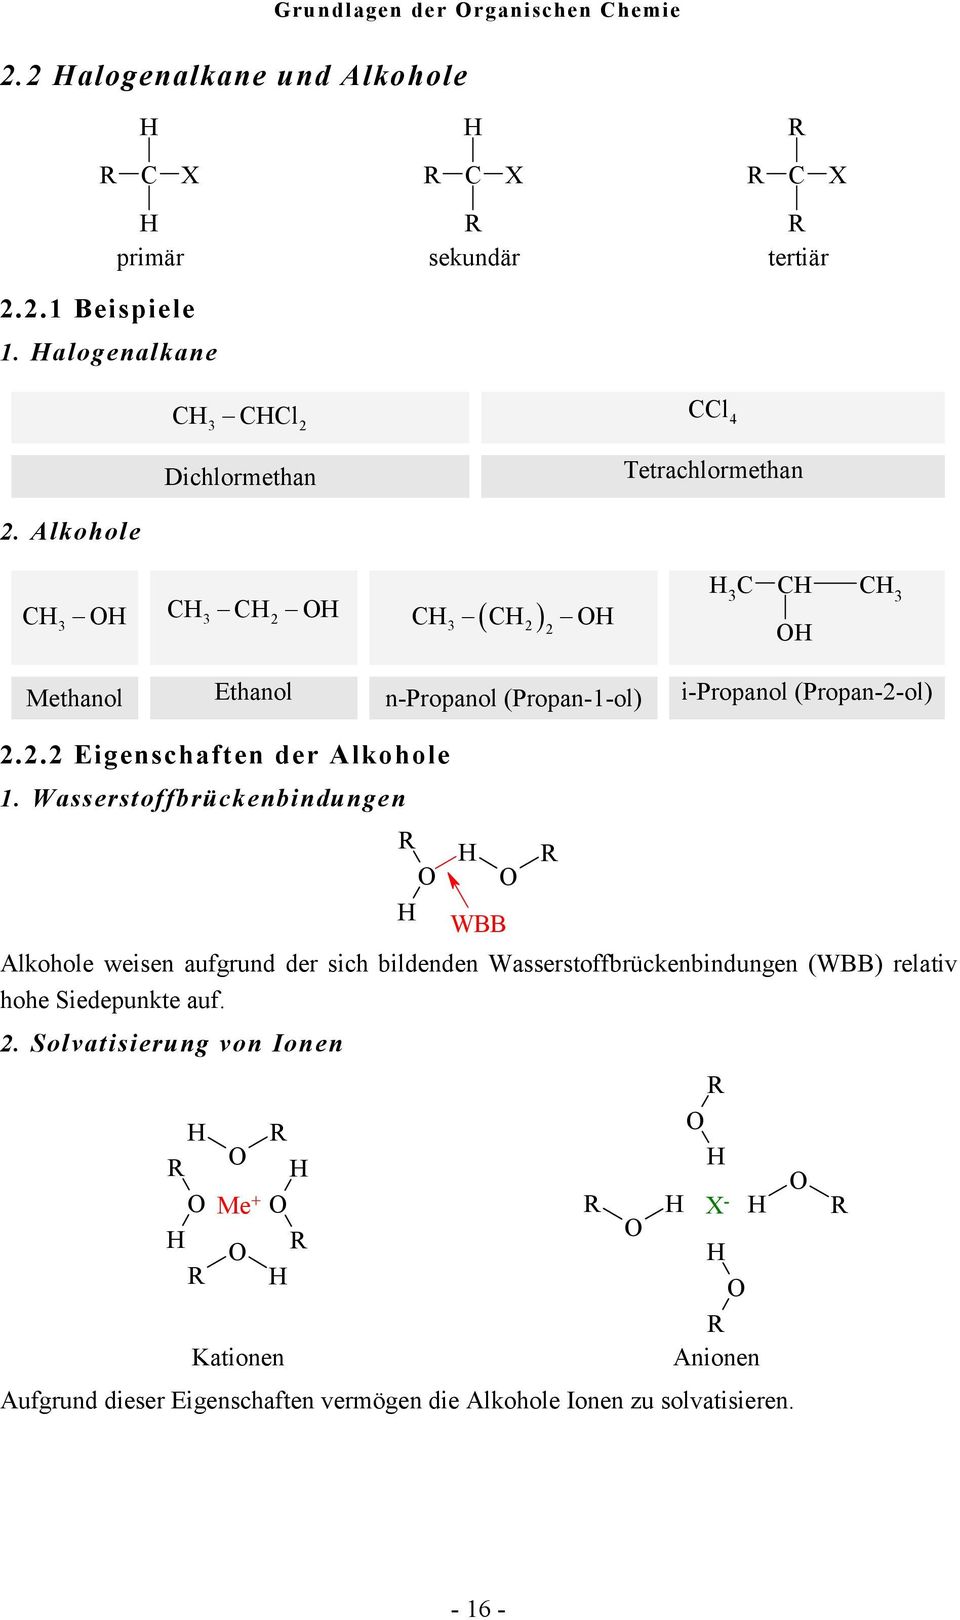 Alkohole 3 3 2 ( ) 3 2 2 3 3 Methanol Ethanol n-propanol (Propan-1-ol) i-propanol (Propan-2-ol) 2.2.2 Eigenschaften der Alkohole 1.